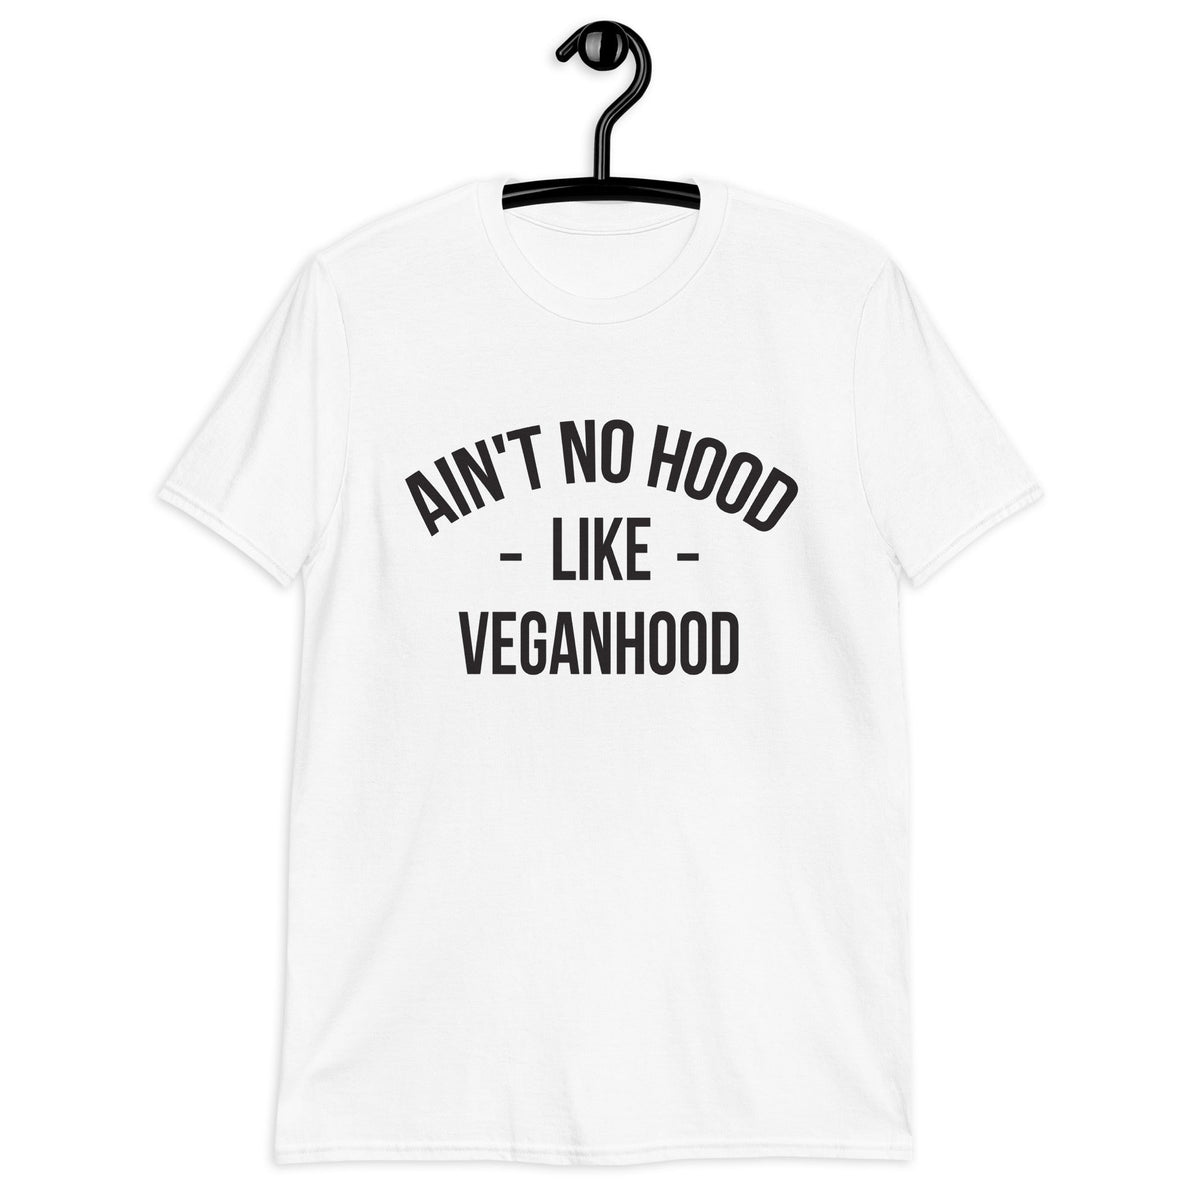 AIN'T NO HOOD LIKE VEGANHOOD Short-Sleeve T-Shirt